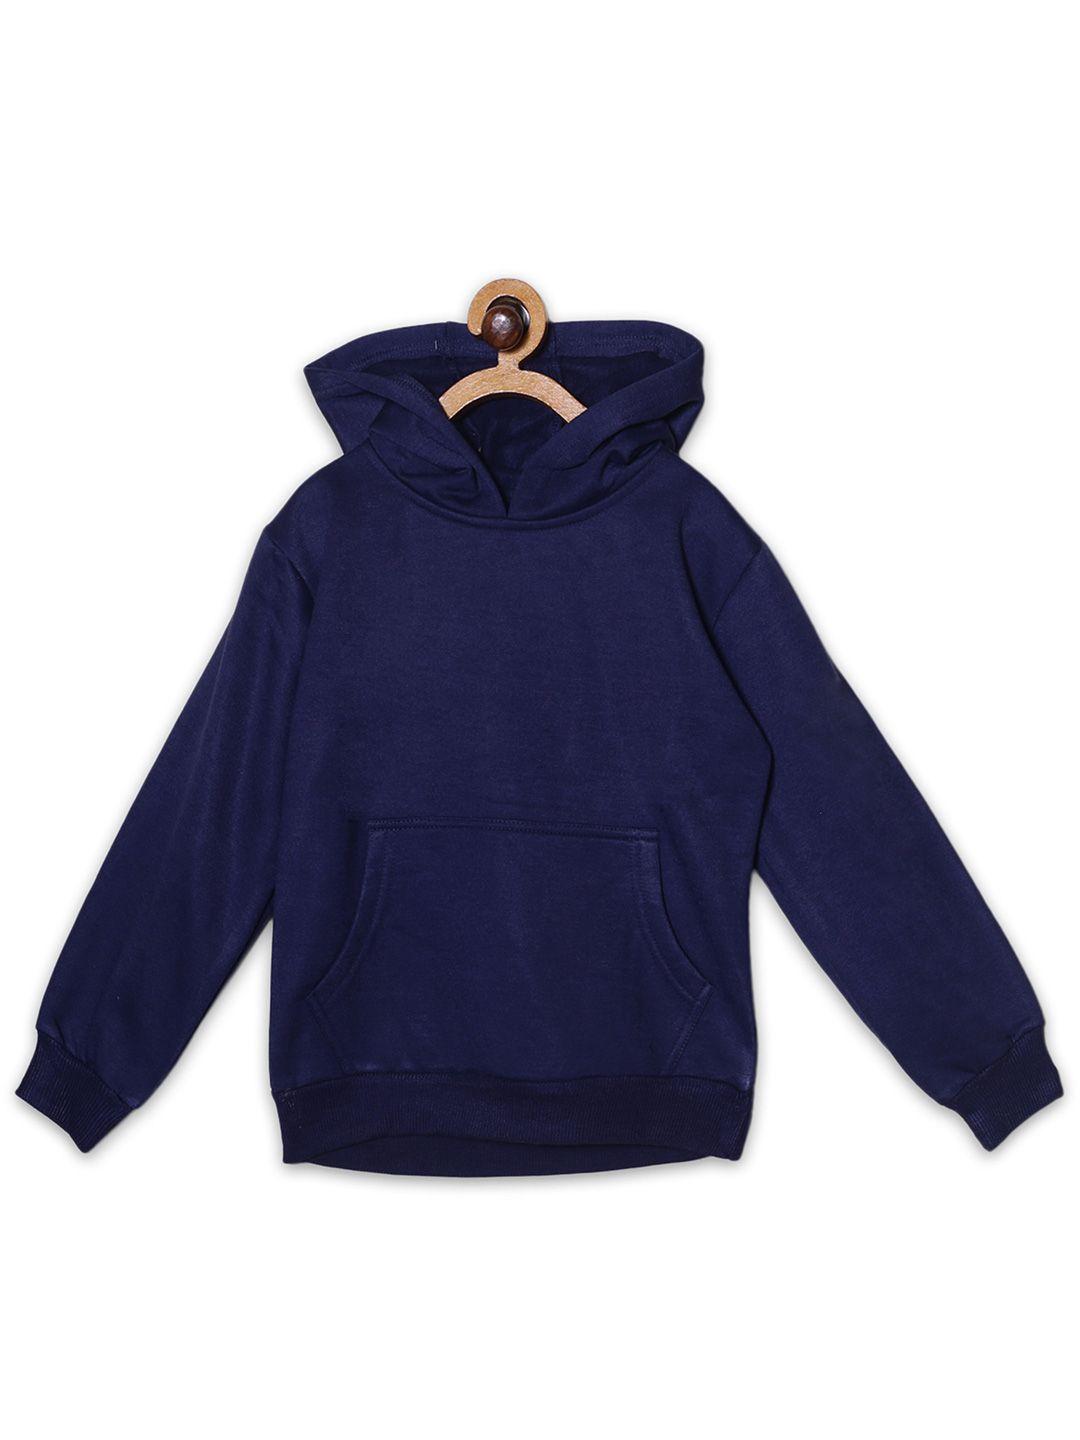 fashionable-boys-hooded-fleece-pullover-sweatshirt